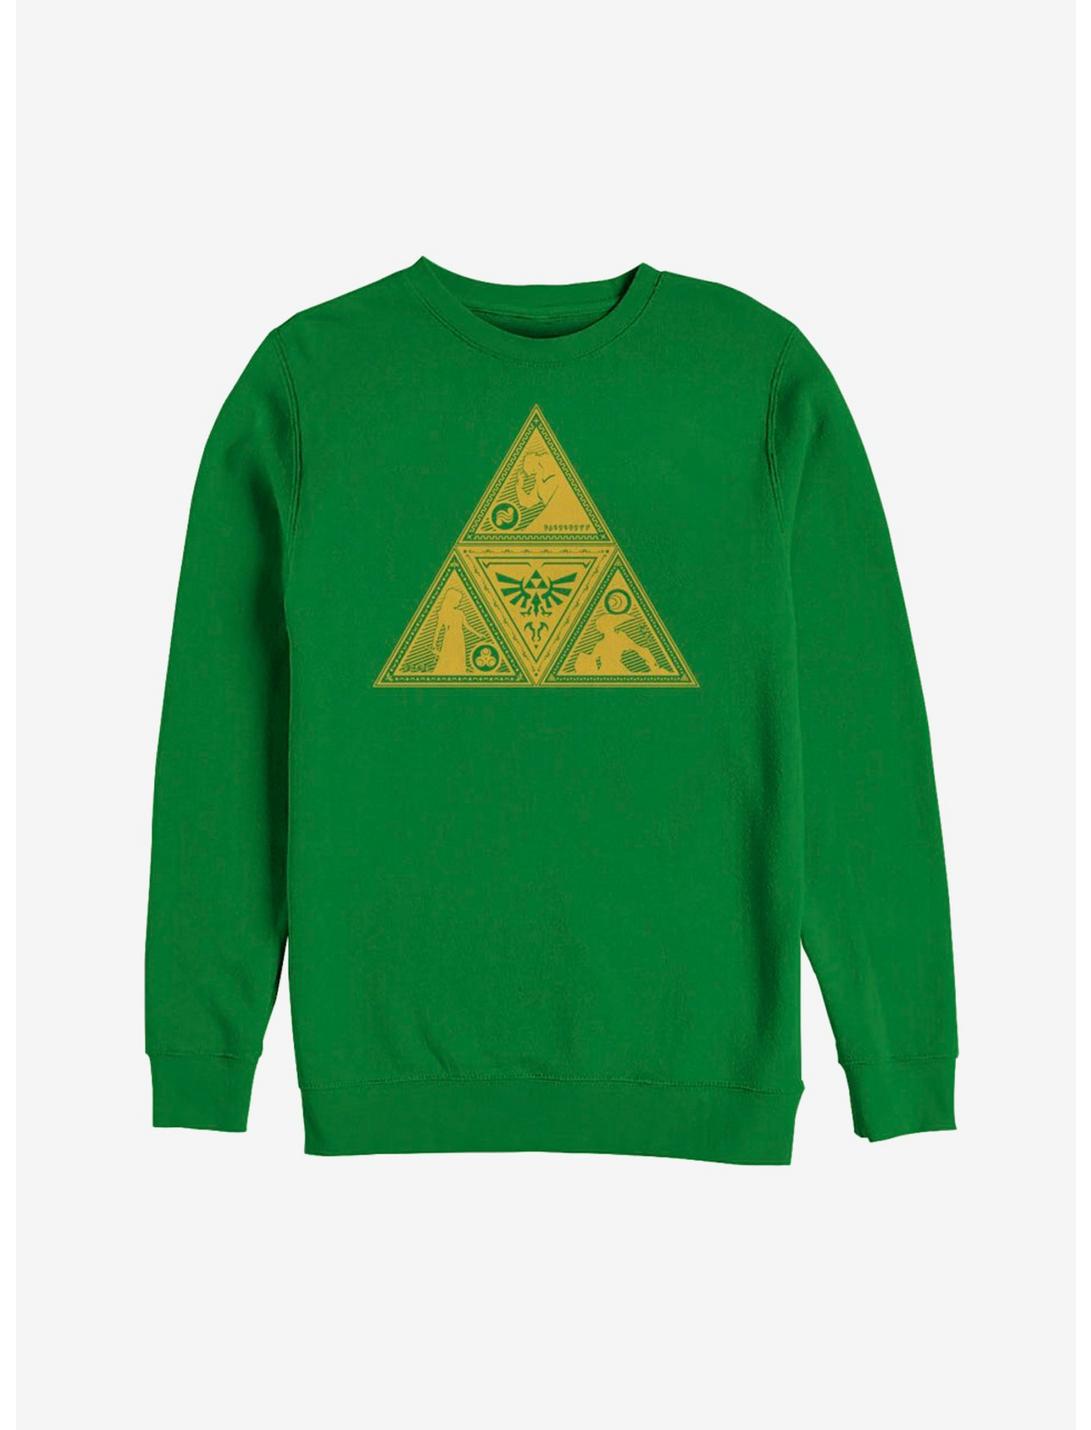 Plus Size Nintendo Legend of Zelda Triforce Silhouette Sweatshirt, KELLY, hi-res